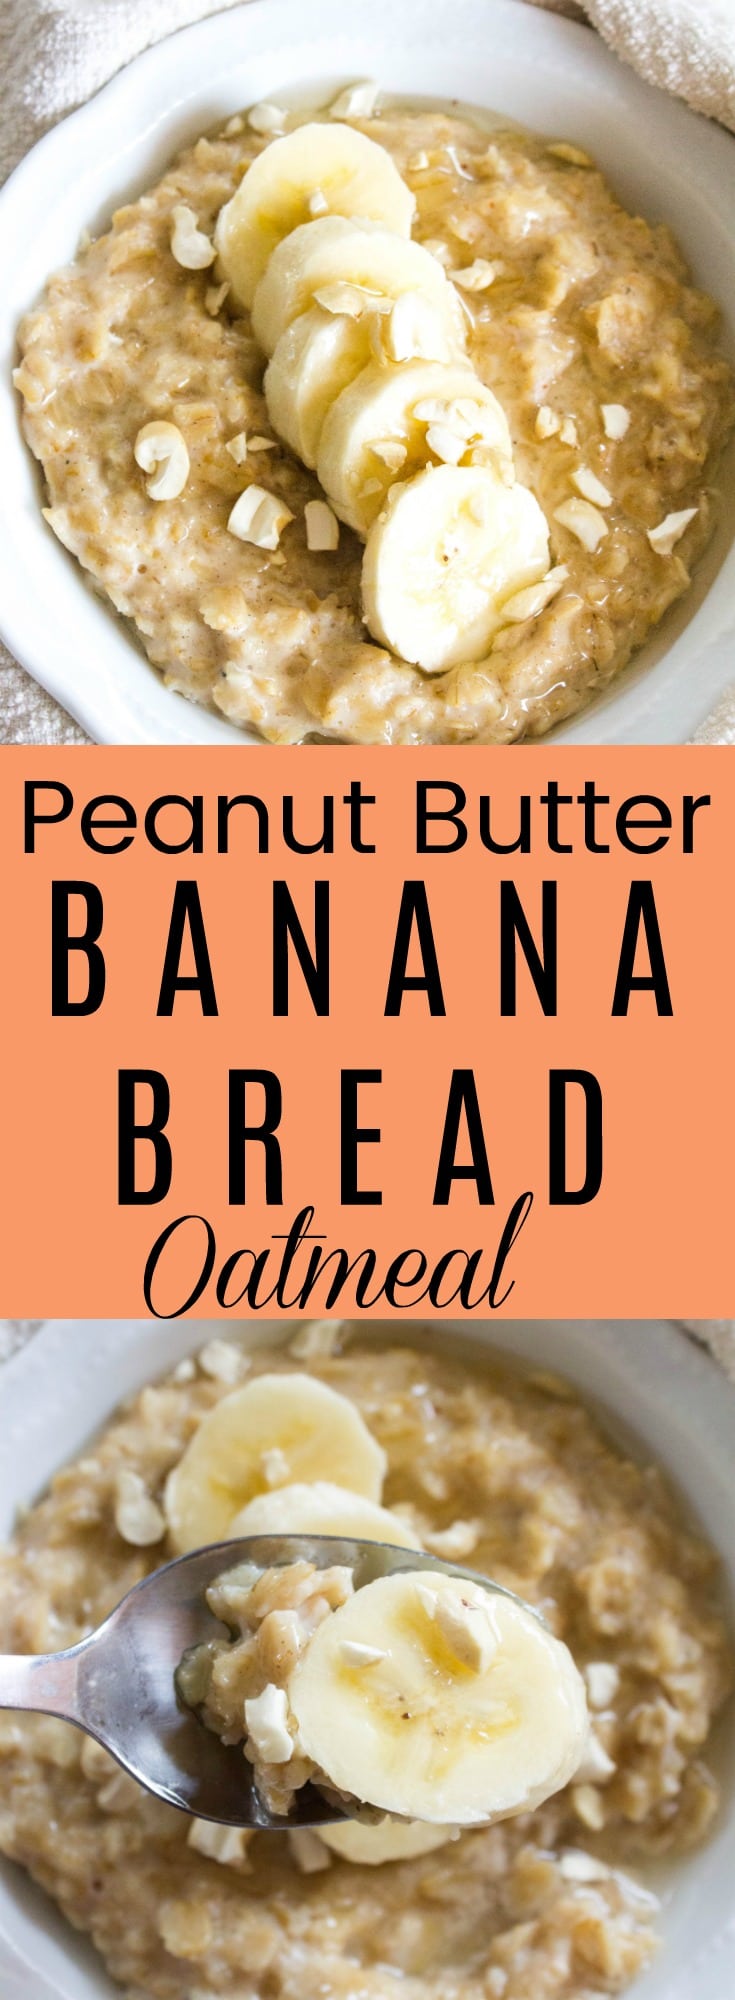 Peanut Butter Banana Bread Oatmeal 3